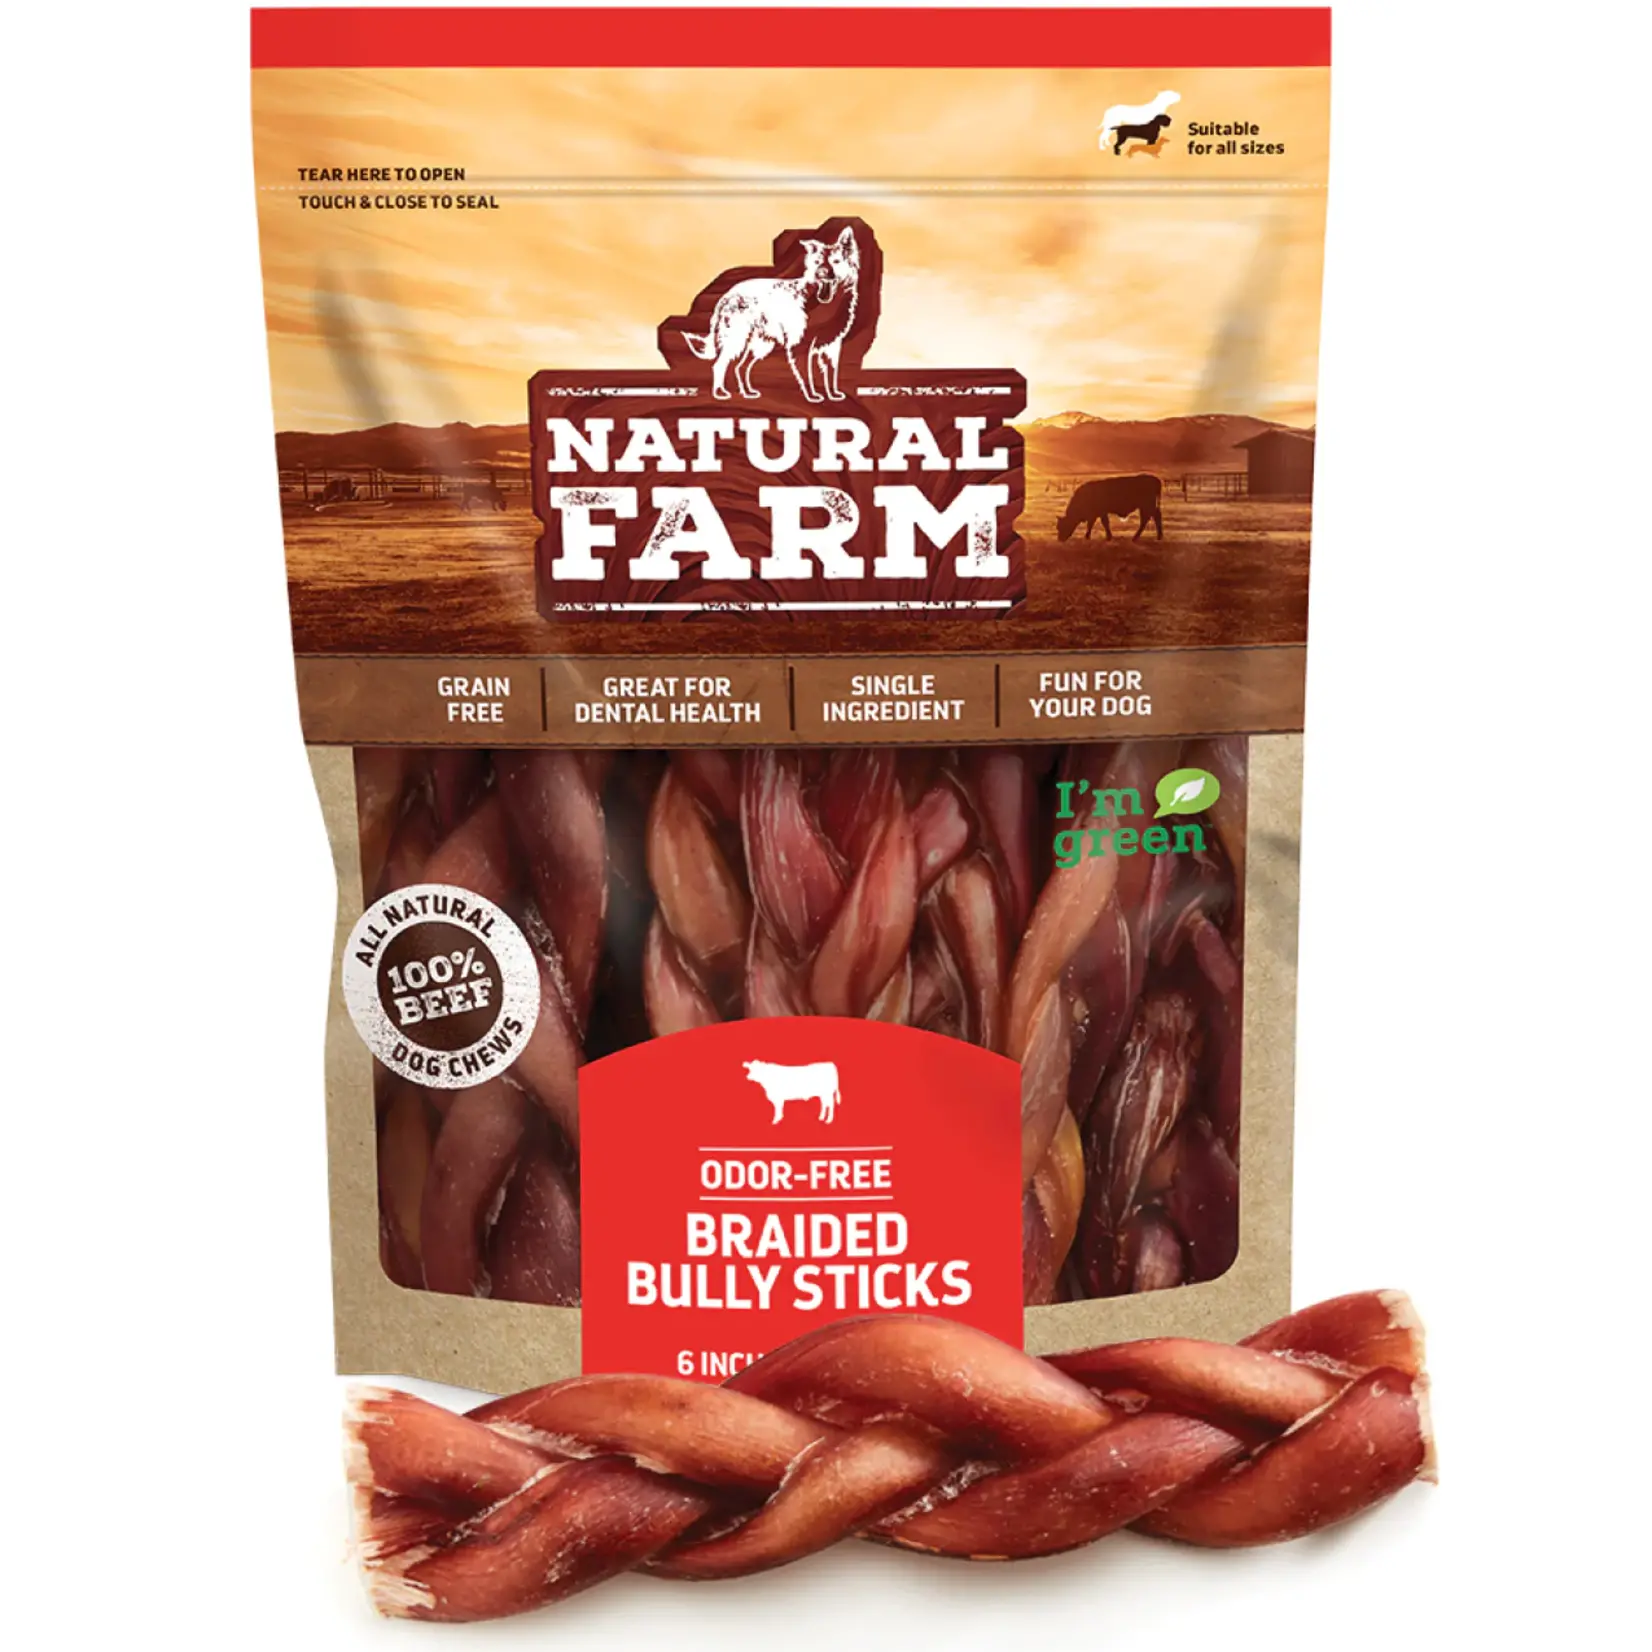 Natural Farm Braided Bully Sticks - 6 Inch, 3 Pack